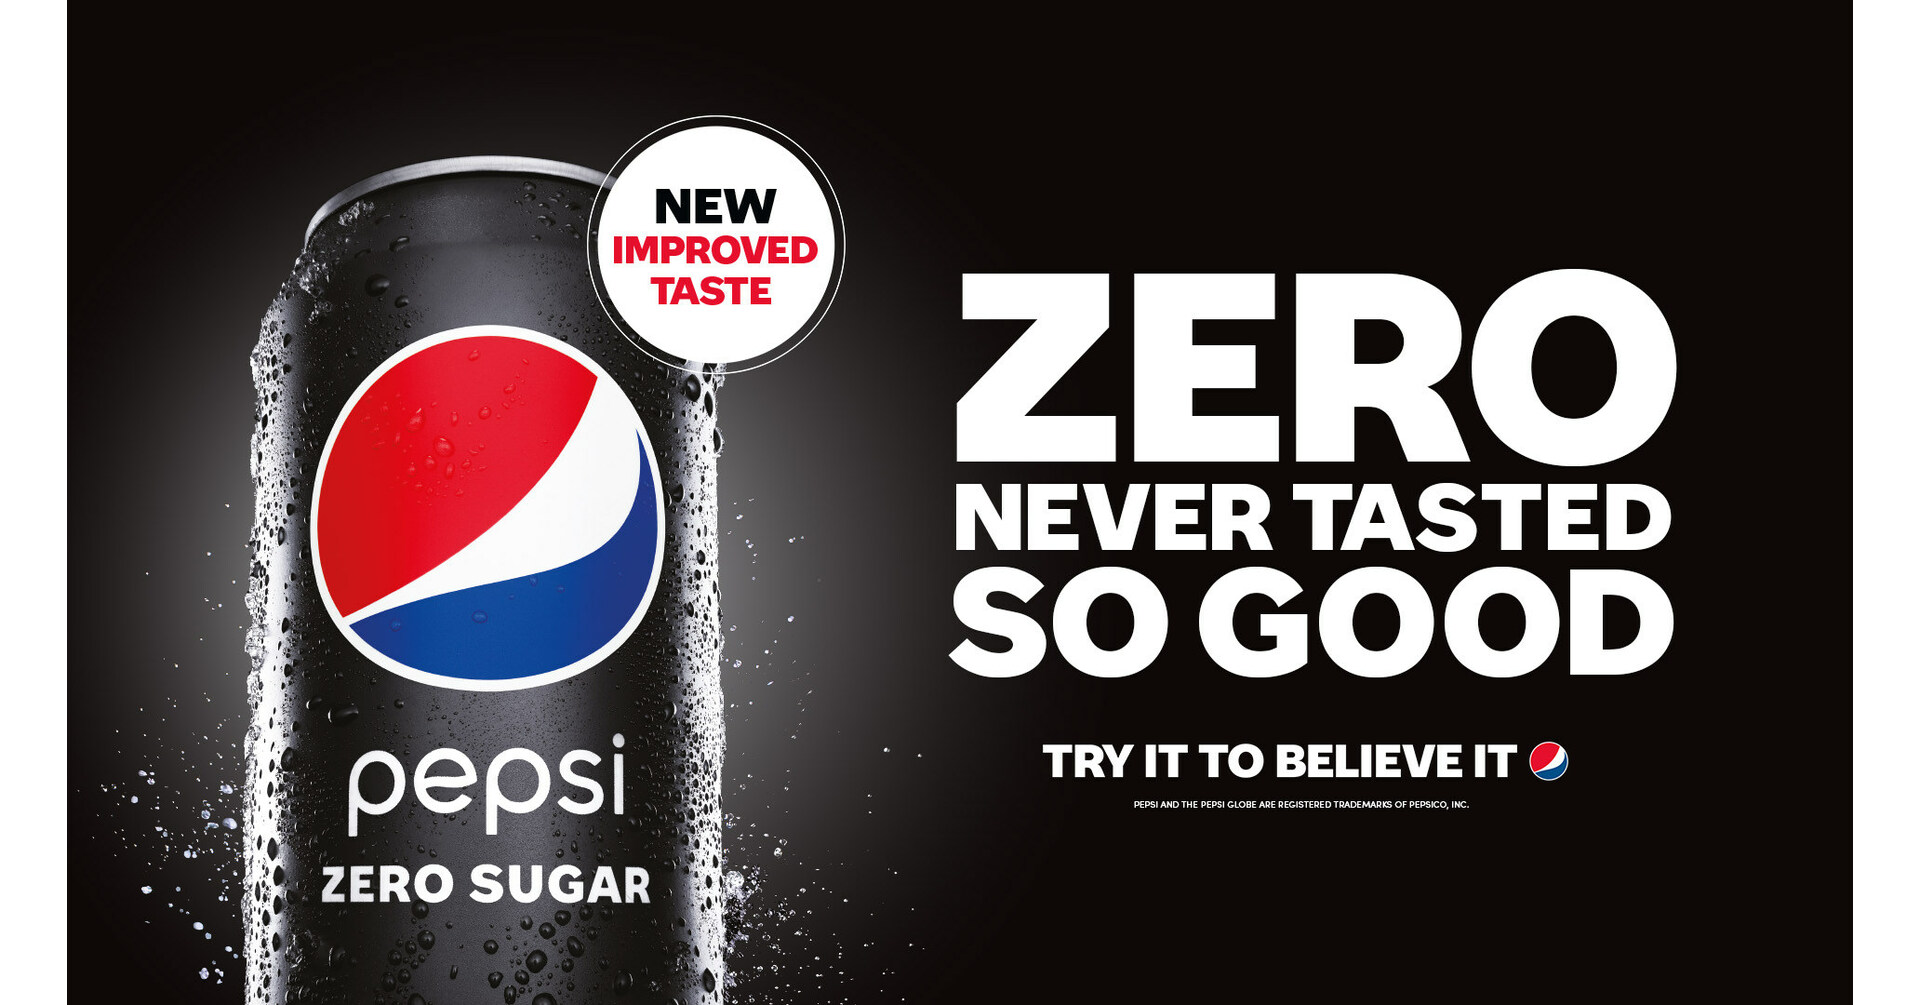 Pepsi Zero Sugar Wild Cherry has now been reformulated (notice the